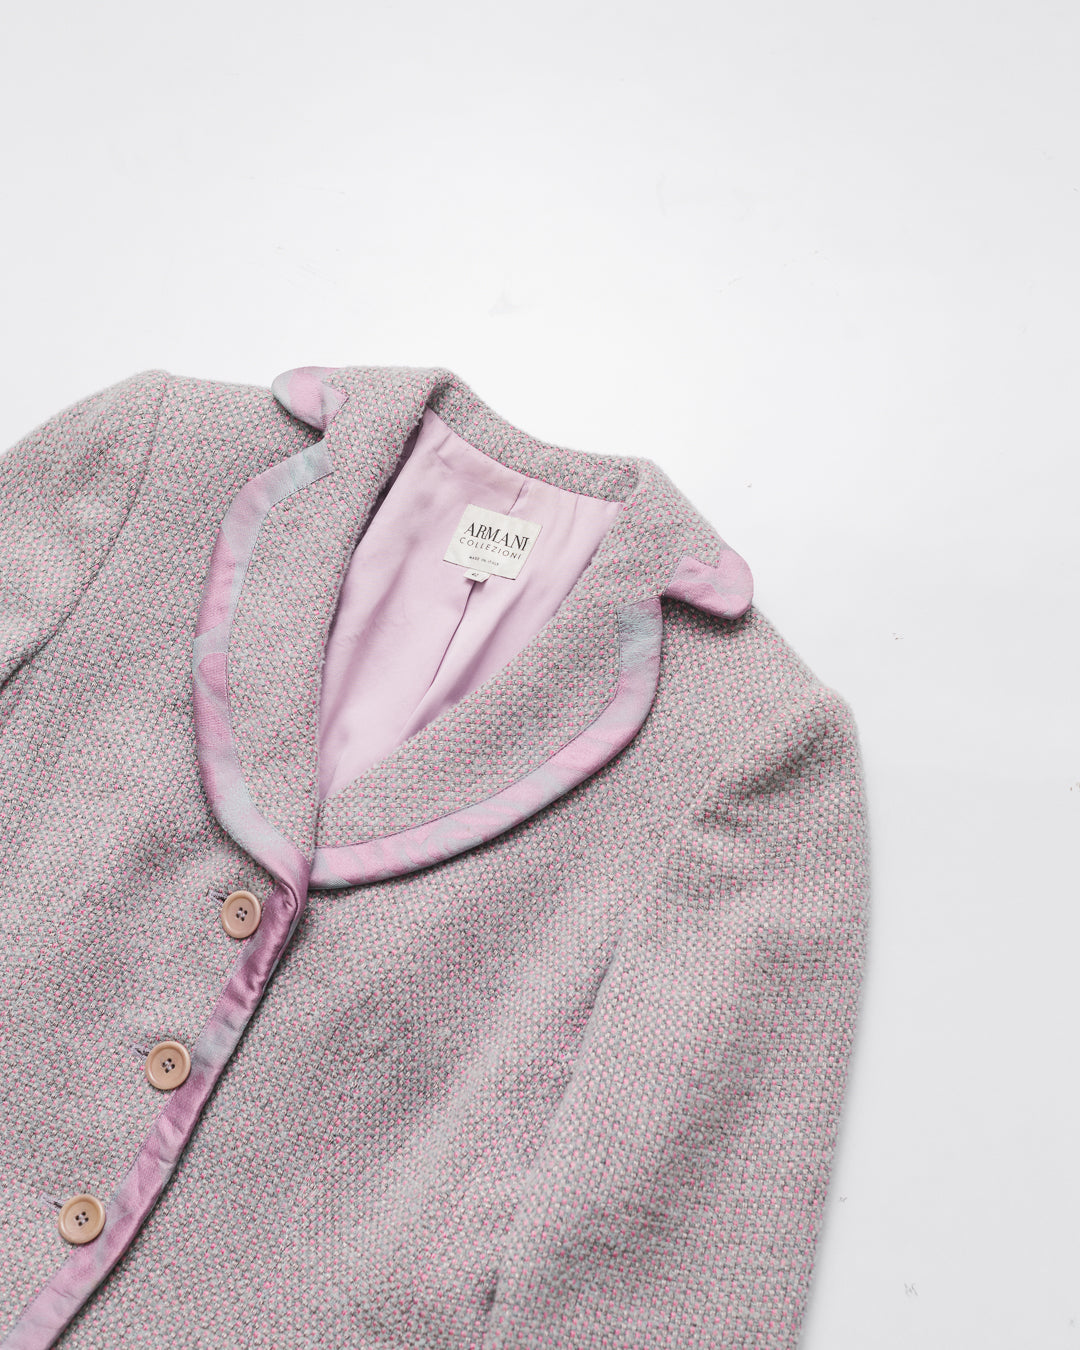 Armani Collezioni Lilac Tweed Blazer